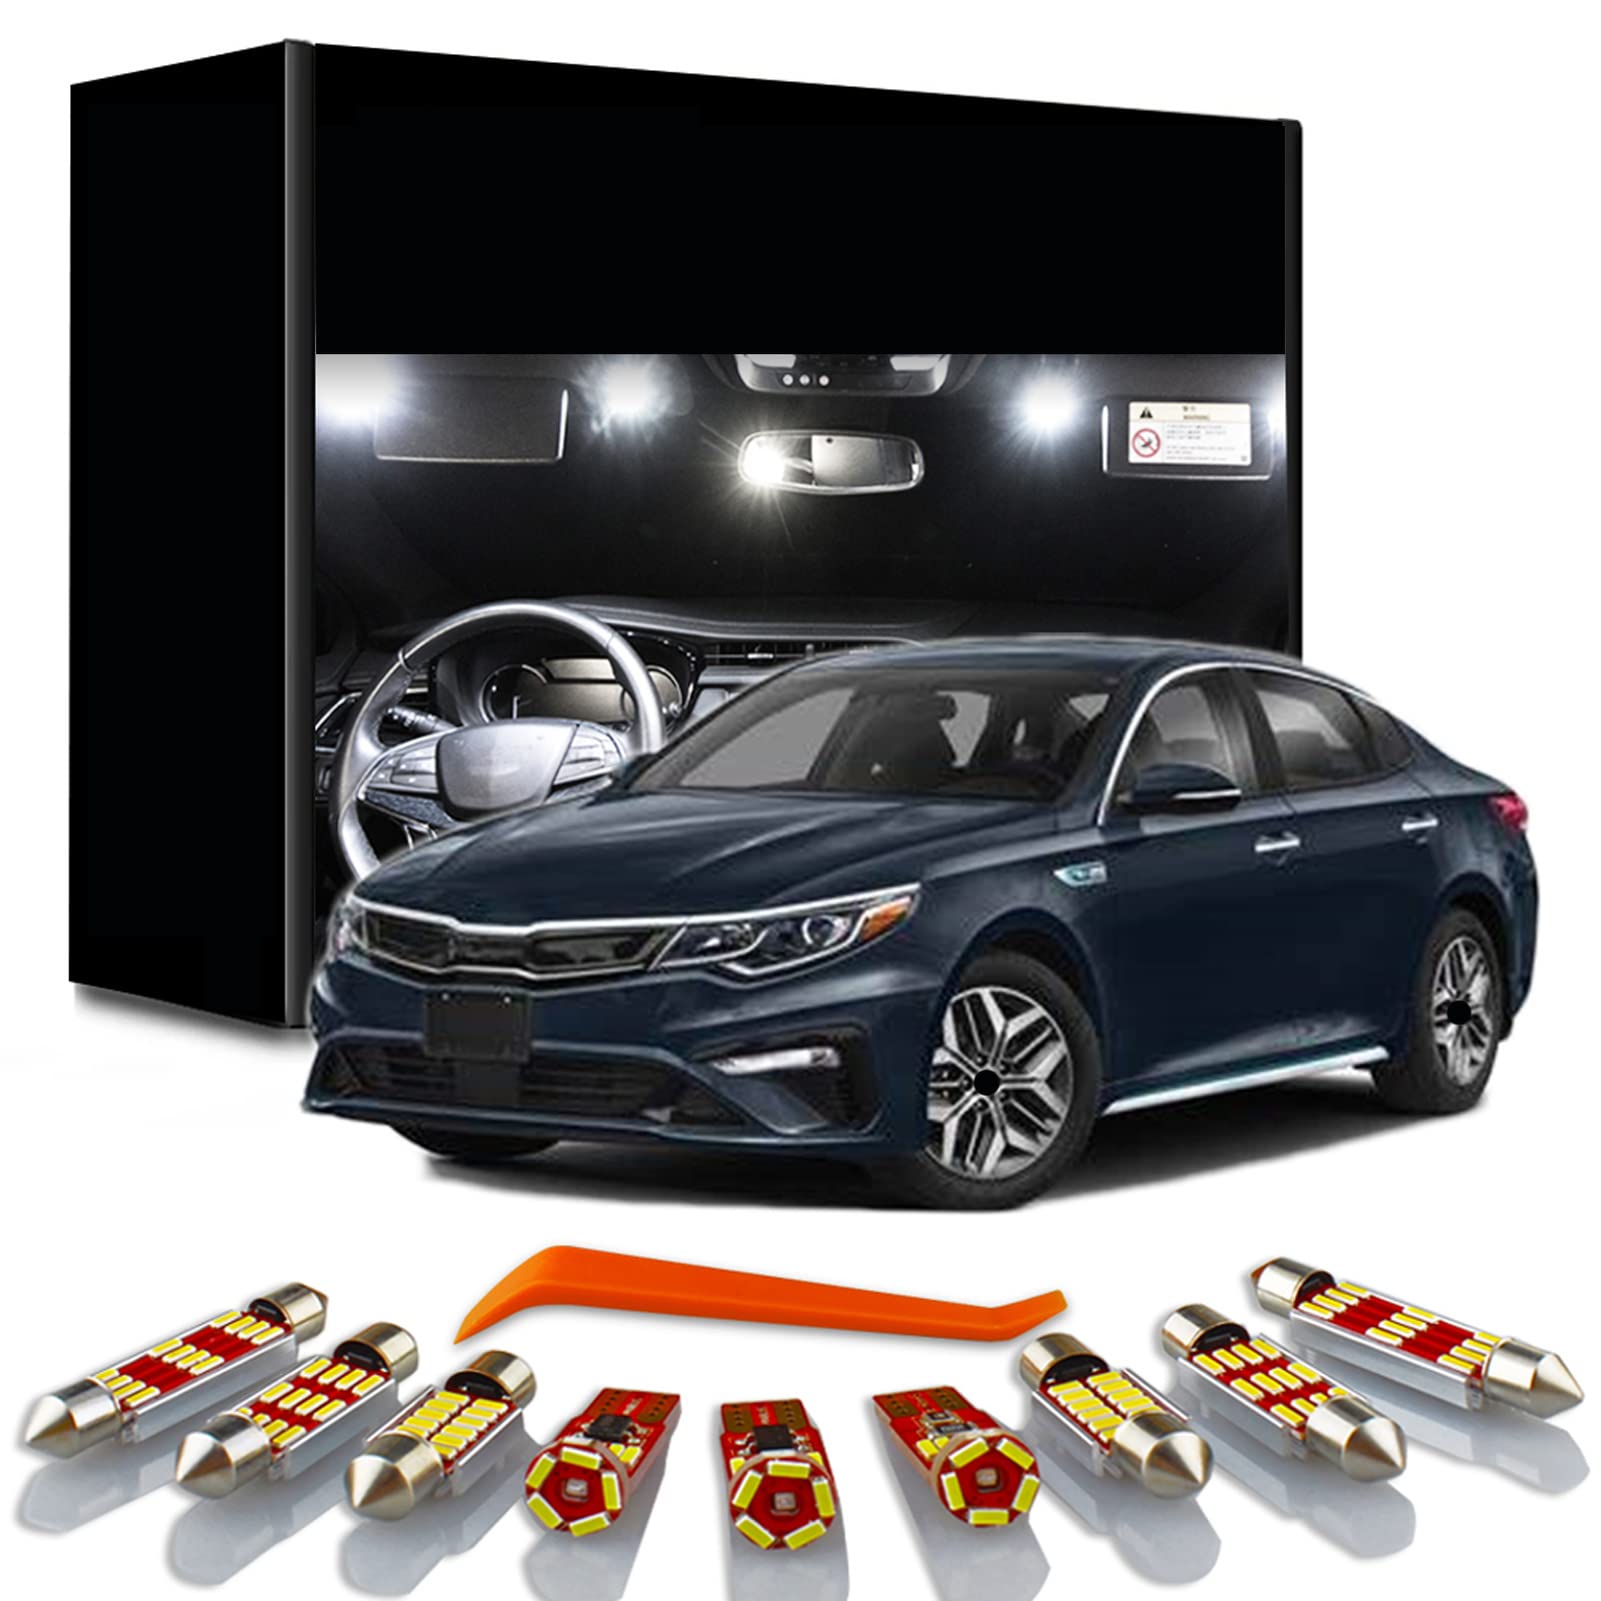 Amazon.com: Teptdirio Car LED Interior Light Kit,Fit for KIA Optima 2001-2015  2016 2017 2018 2019 2020 car Accessories : Automotive